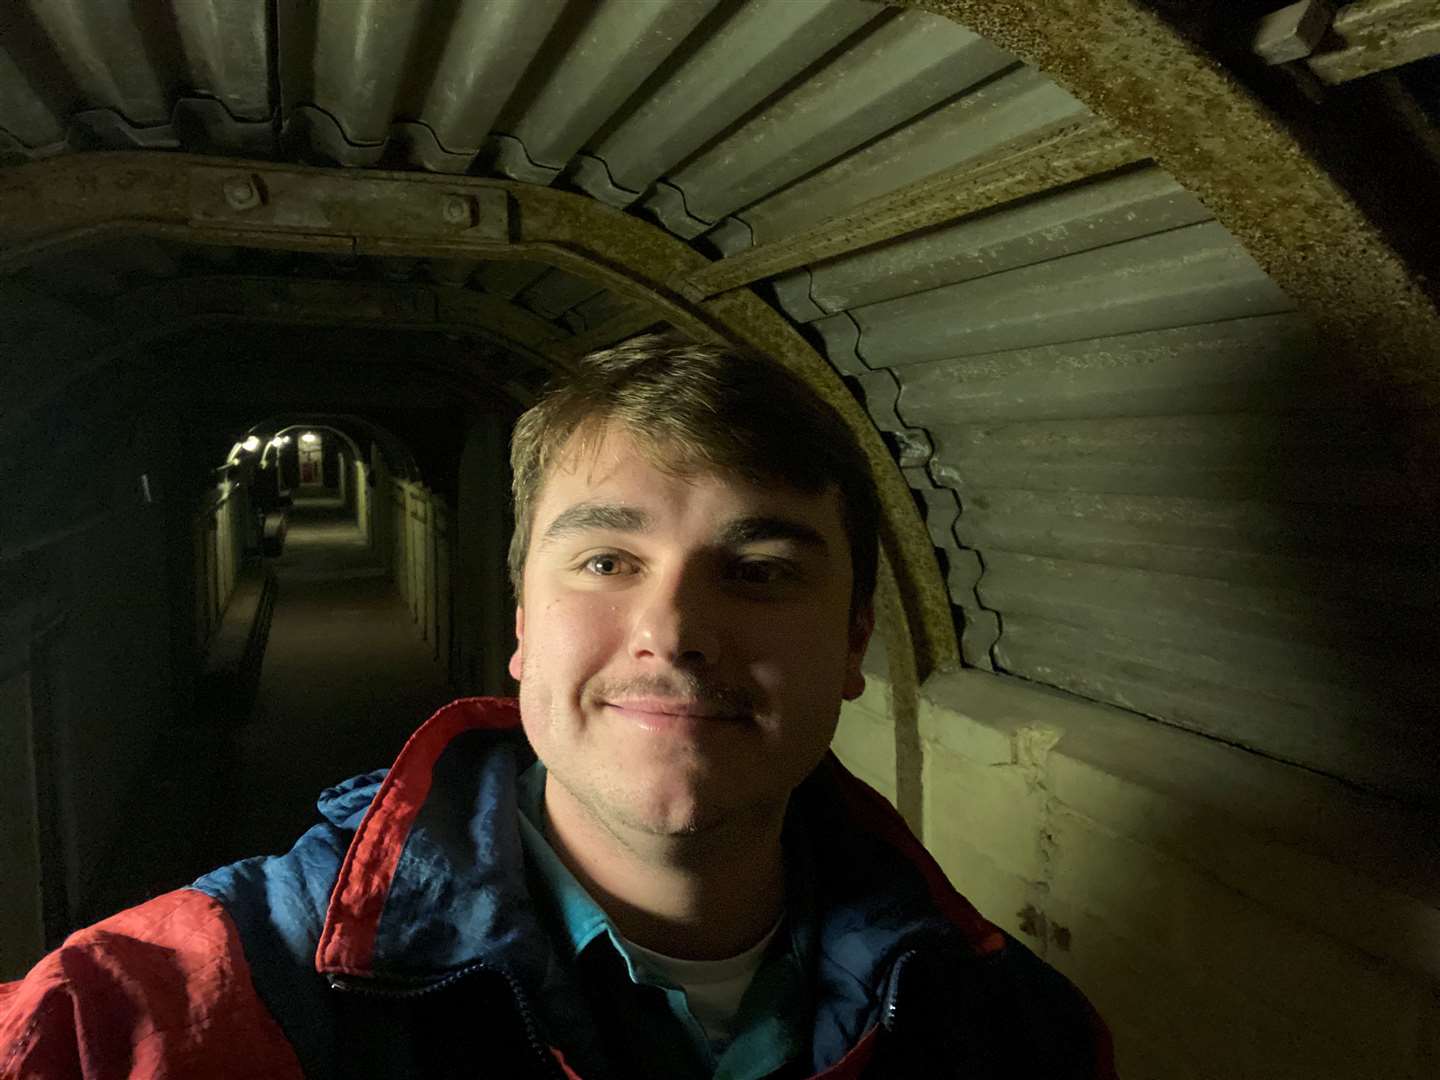 Reporter Max Chesson explores the Dumpy tunnels at Dover Castle